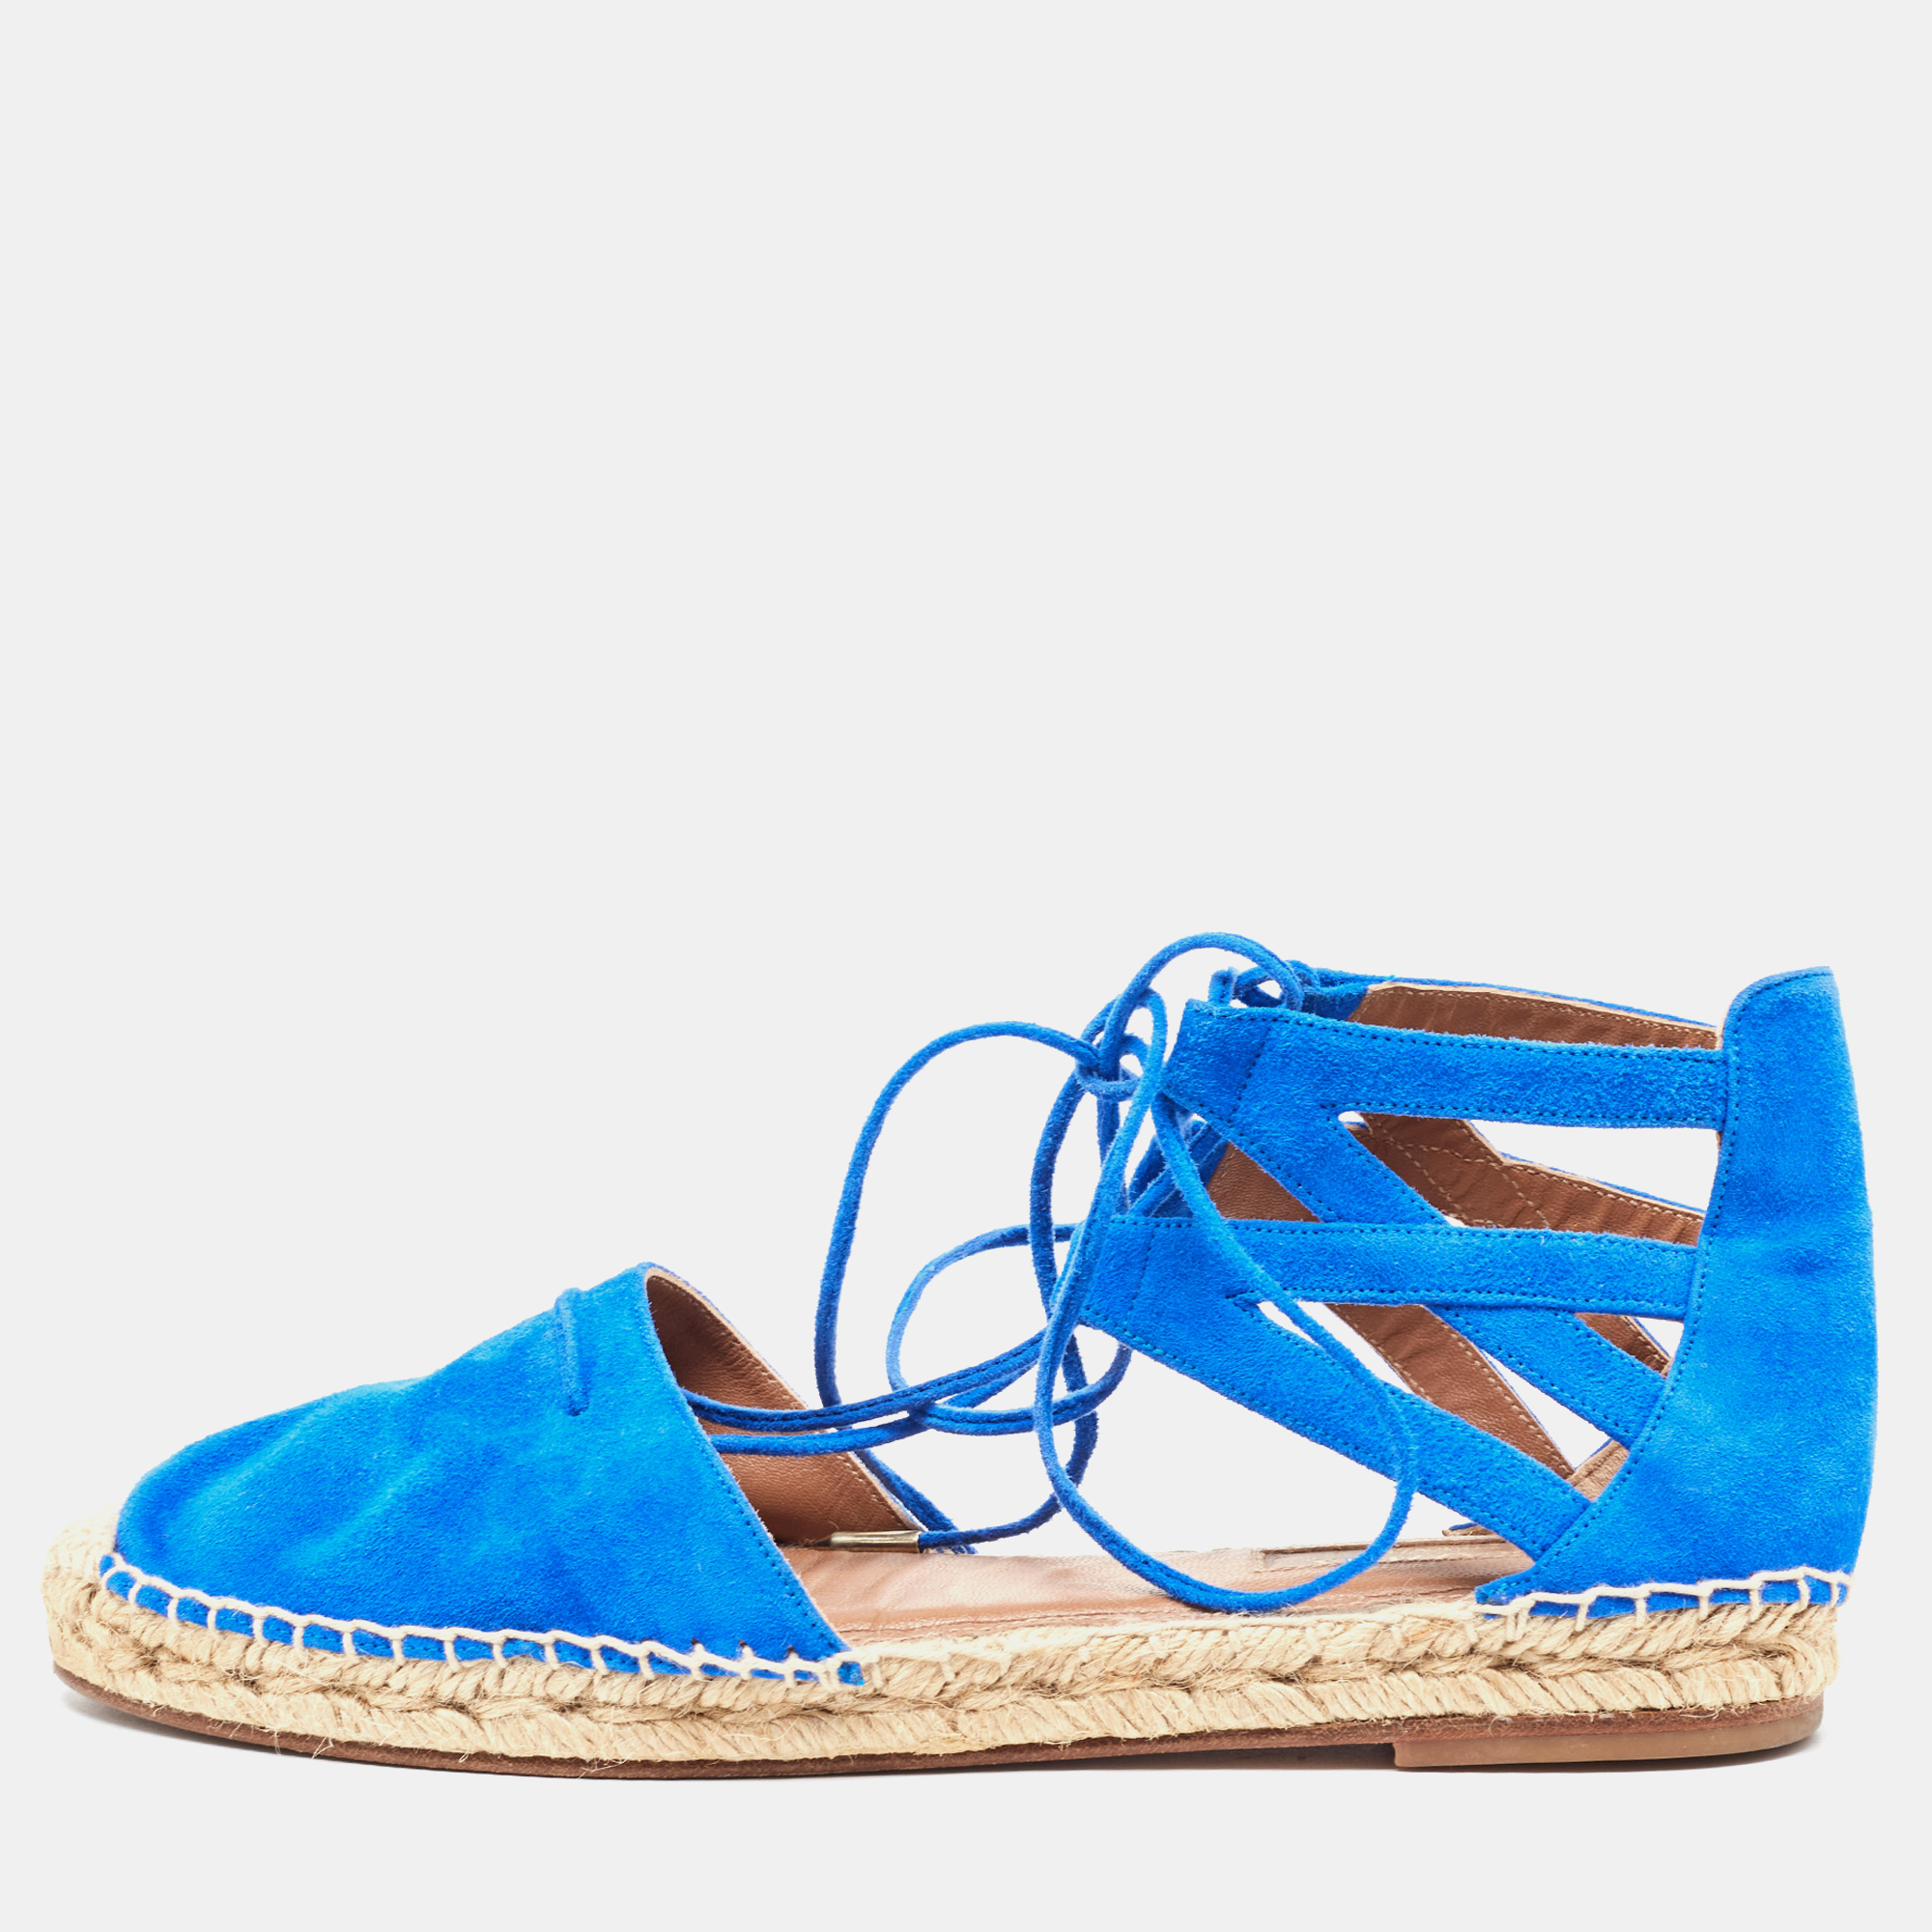 Pre-owned Aquazzura Blue Suede Strappy Espadrille Sandals Size 38